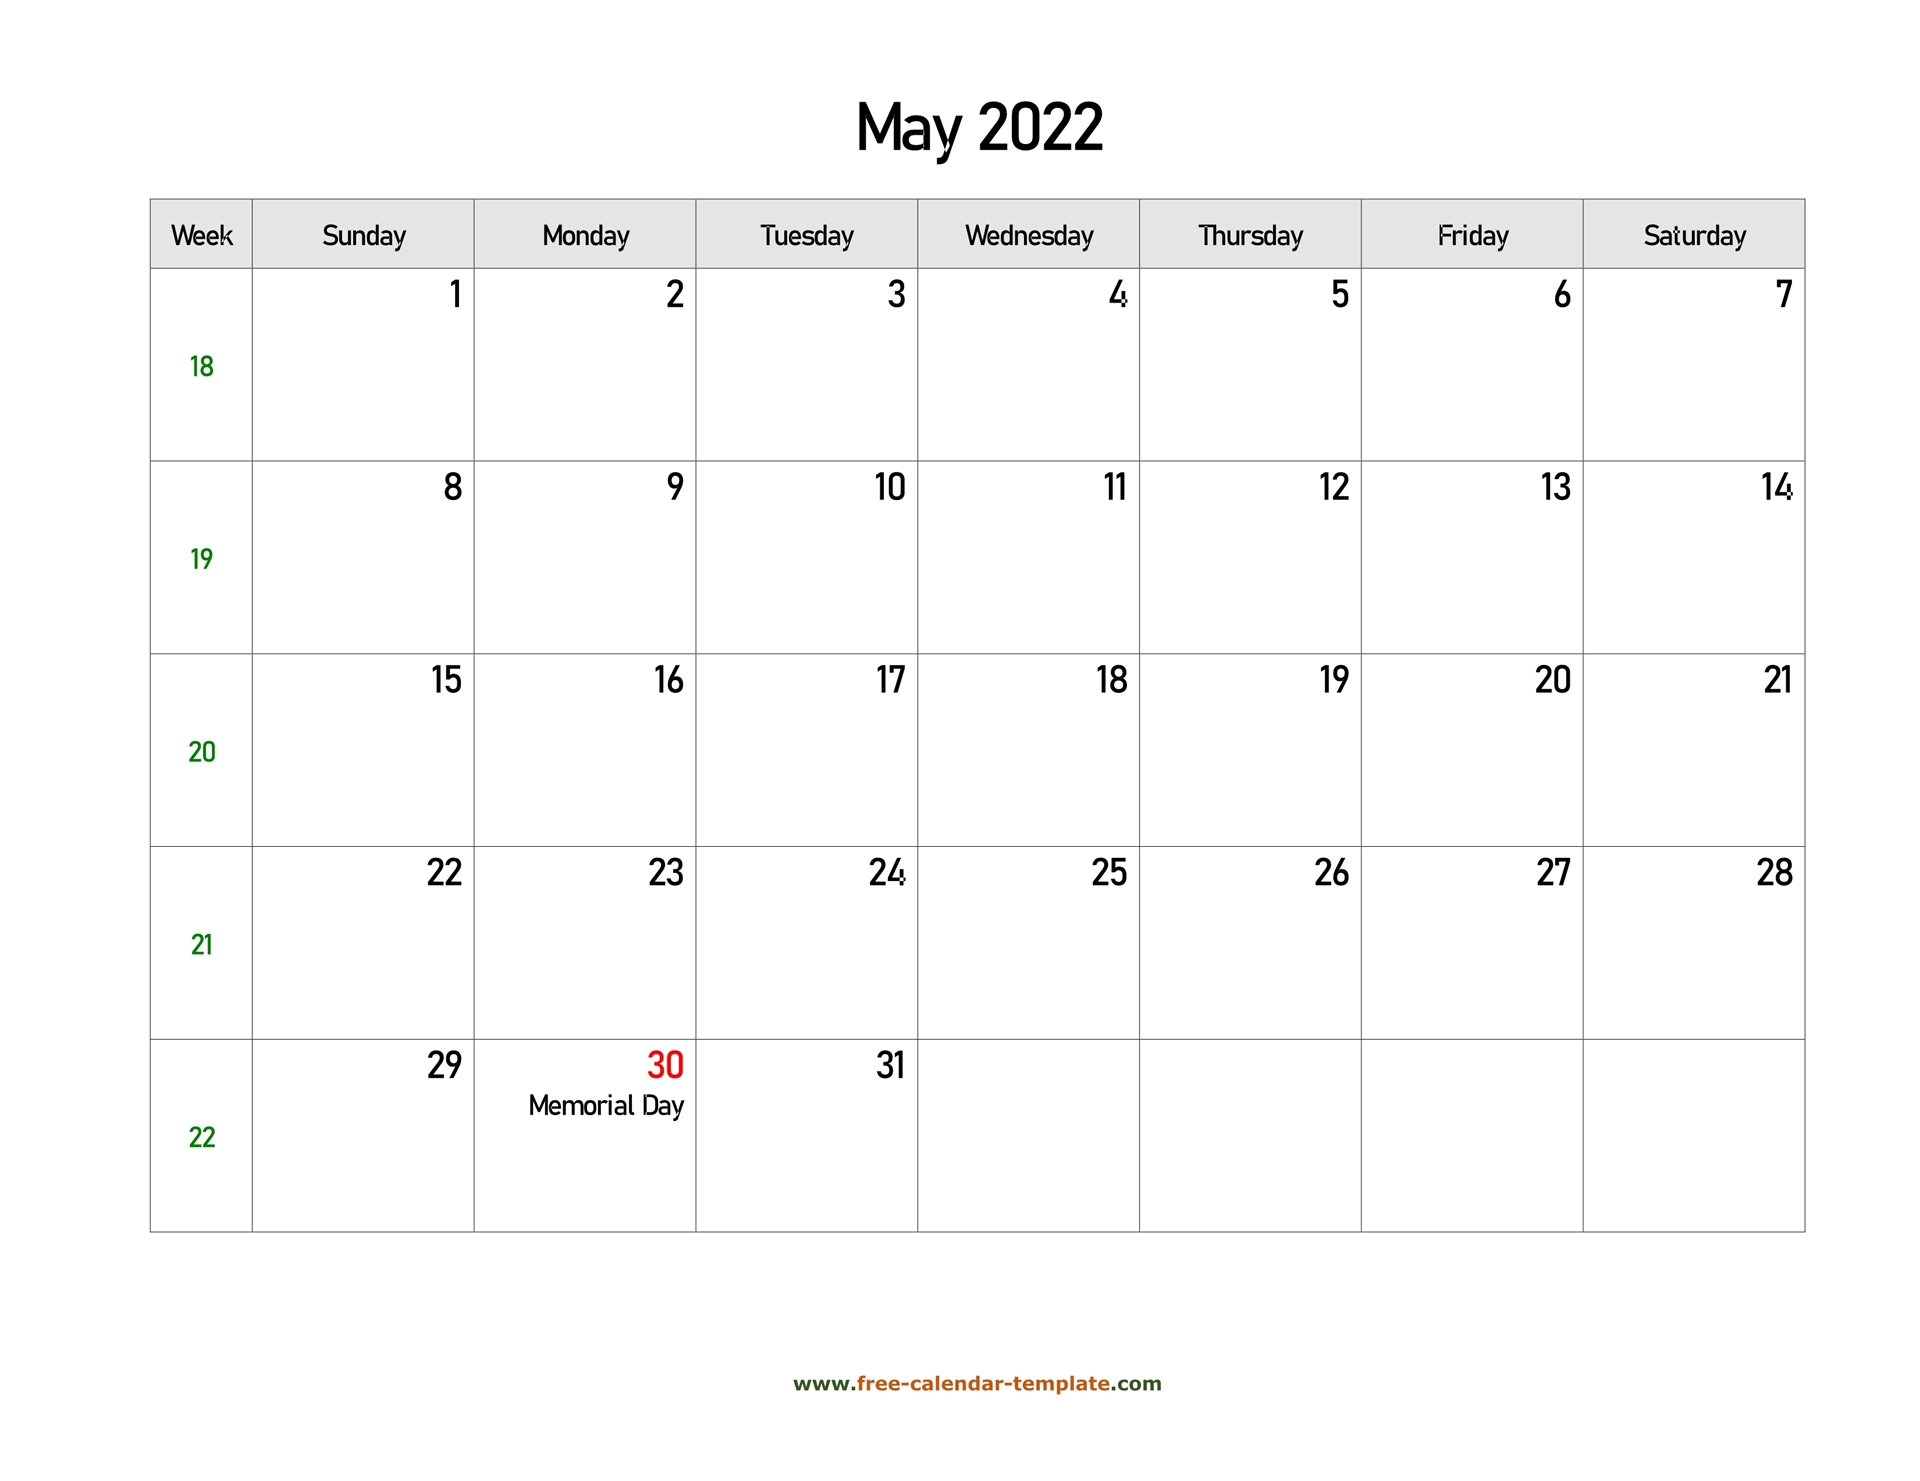 Free 2022 Calendar Blank May Template (Horizontal) | Free-Calendar-Template